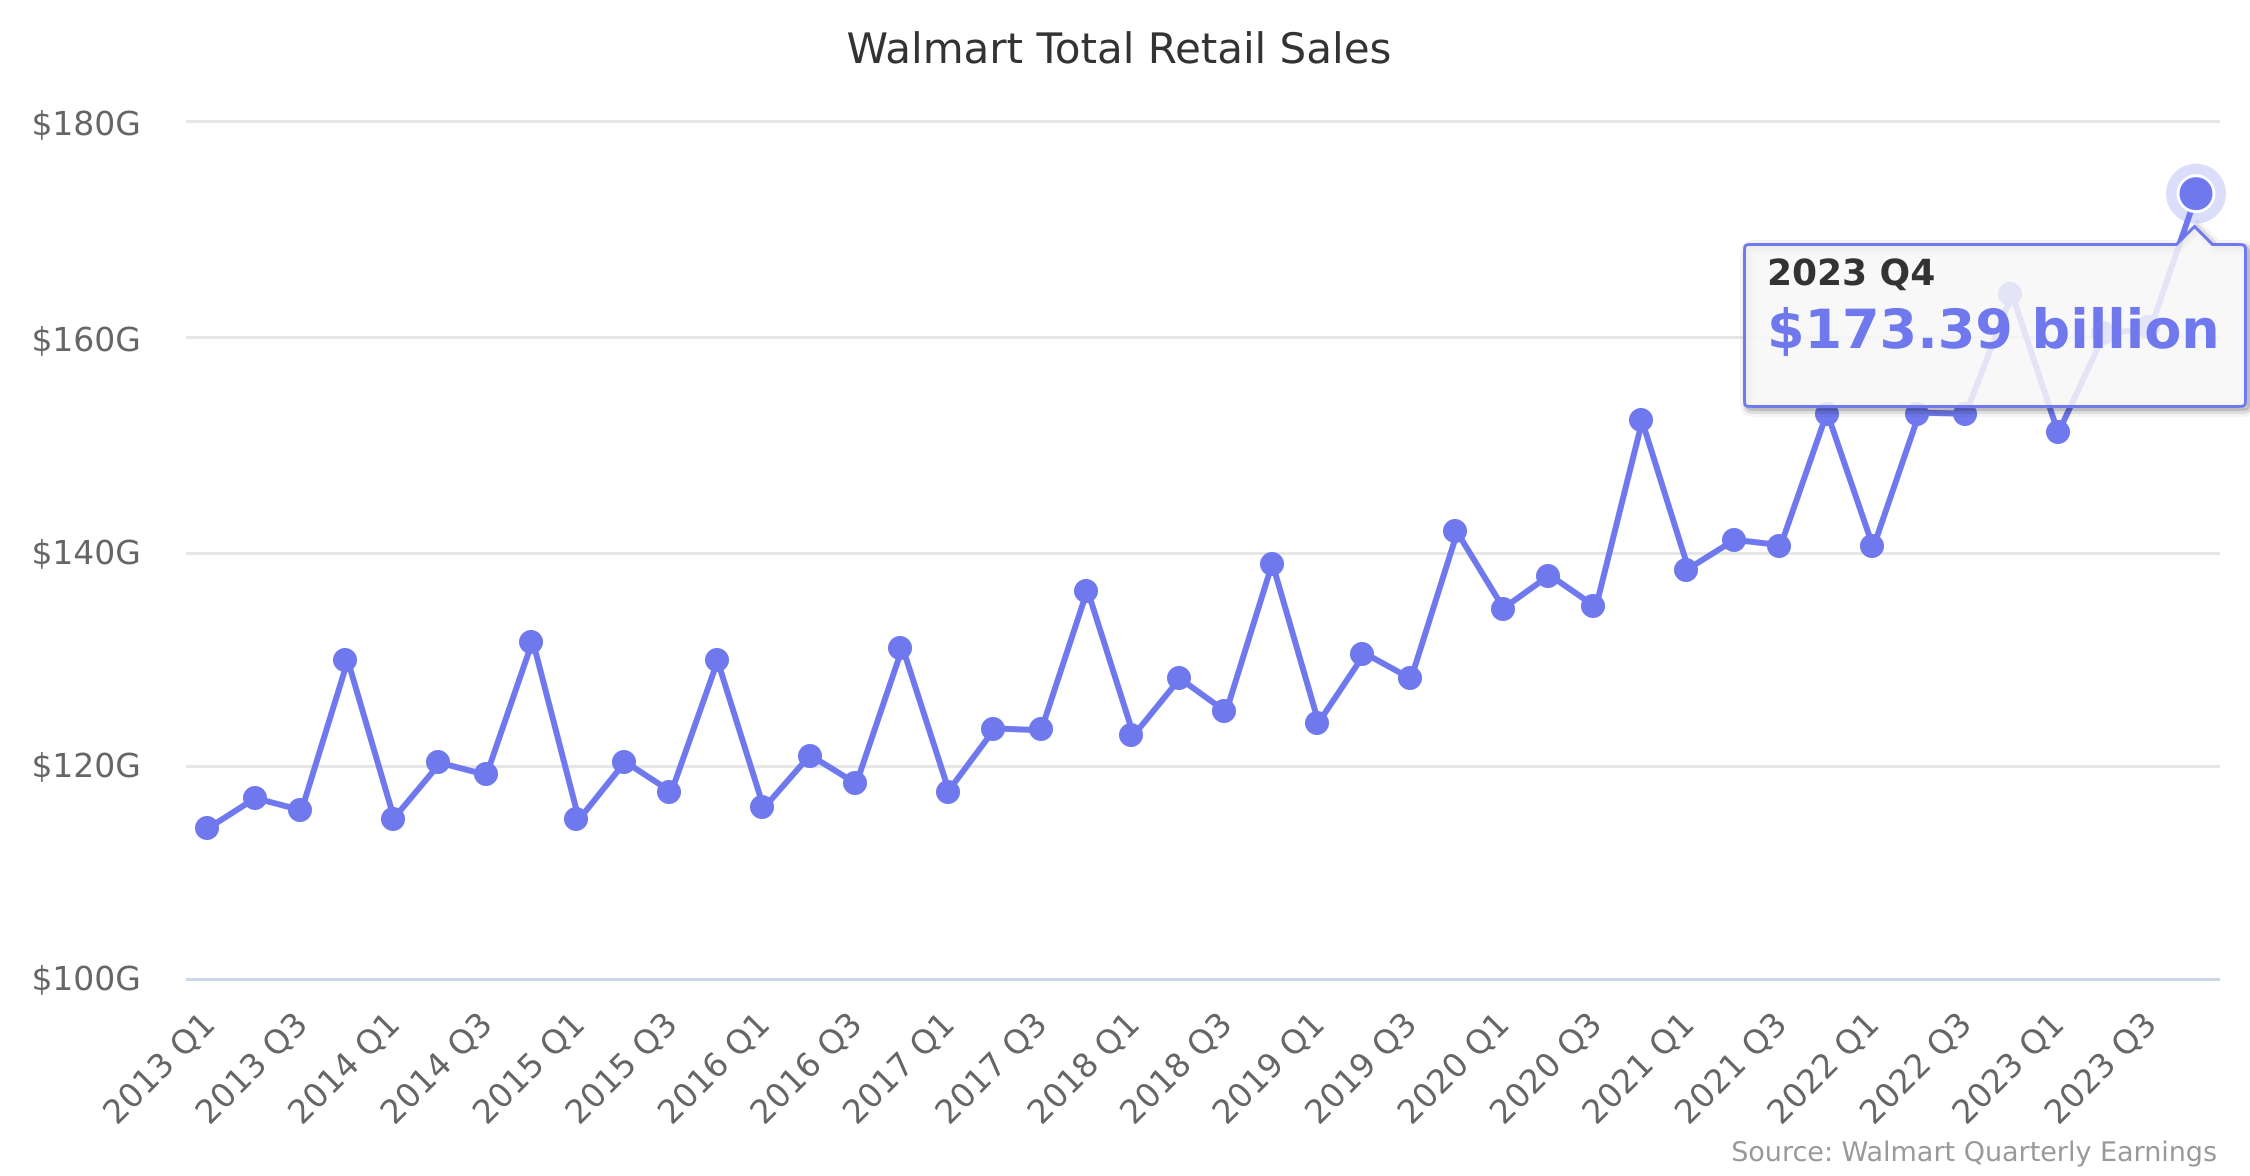 Walmart Total Retail Sales 2013-2022